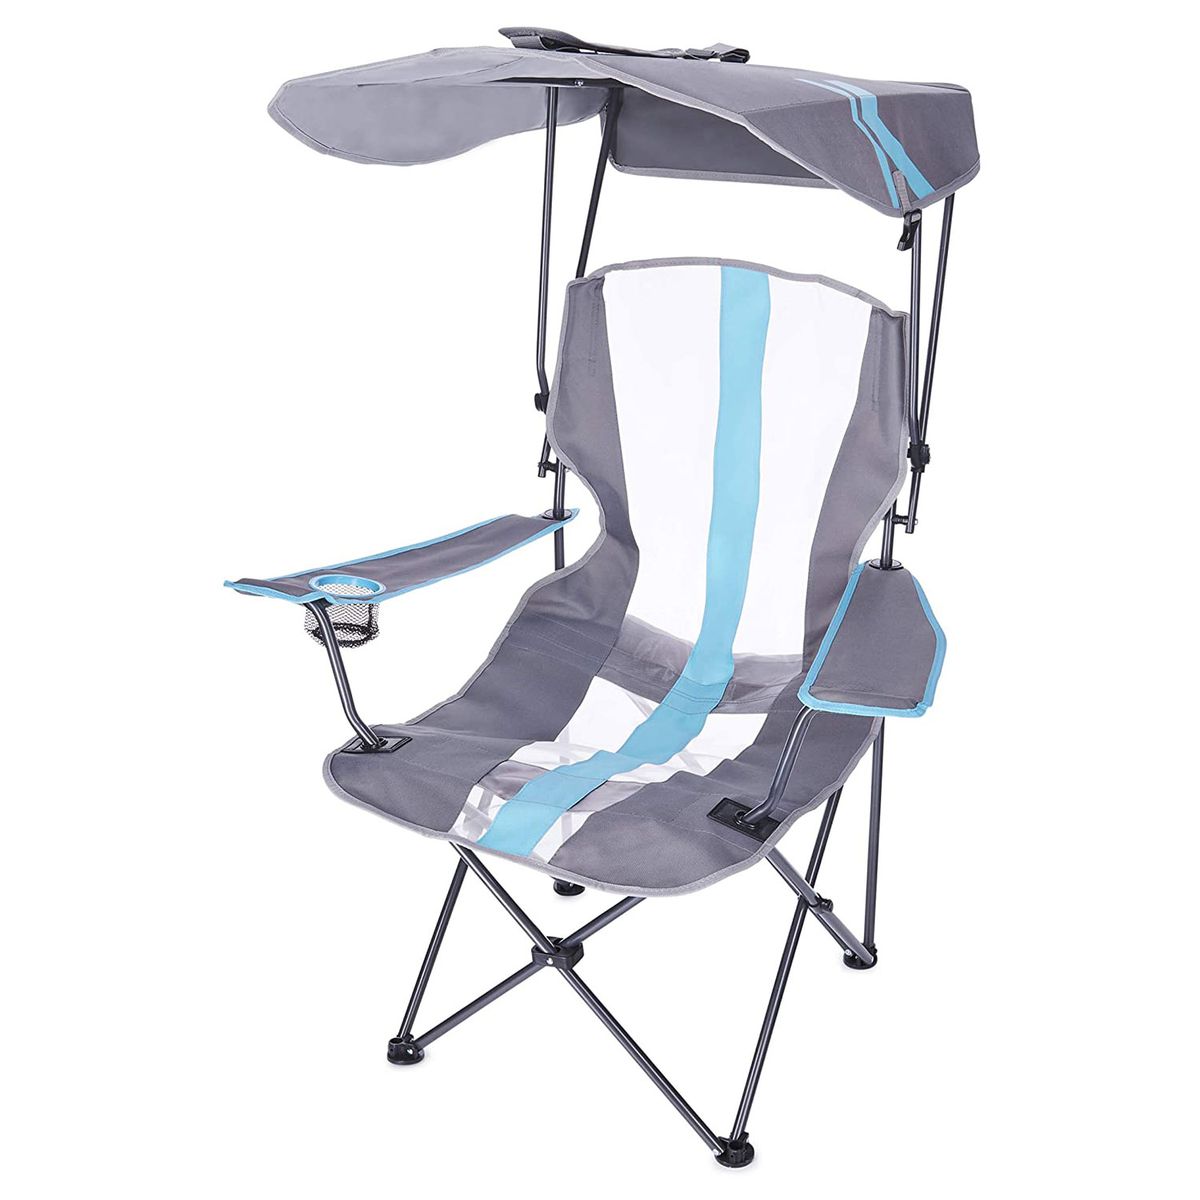 Best for Sunny Days: Kelsyus Canopy Chair